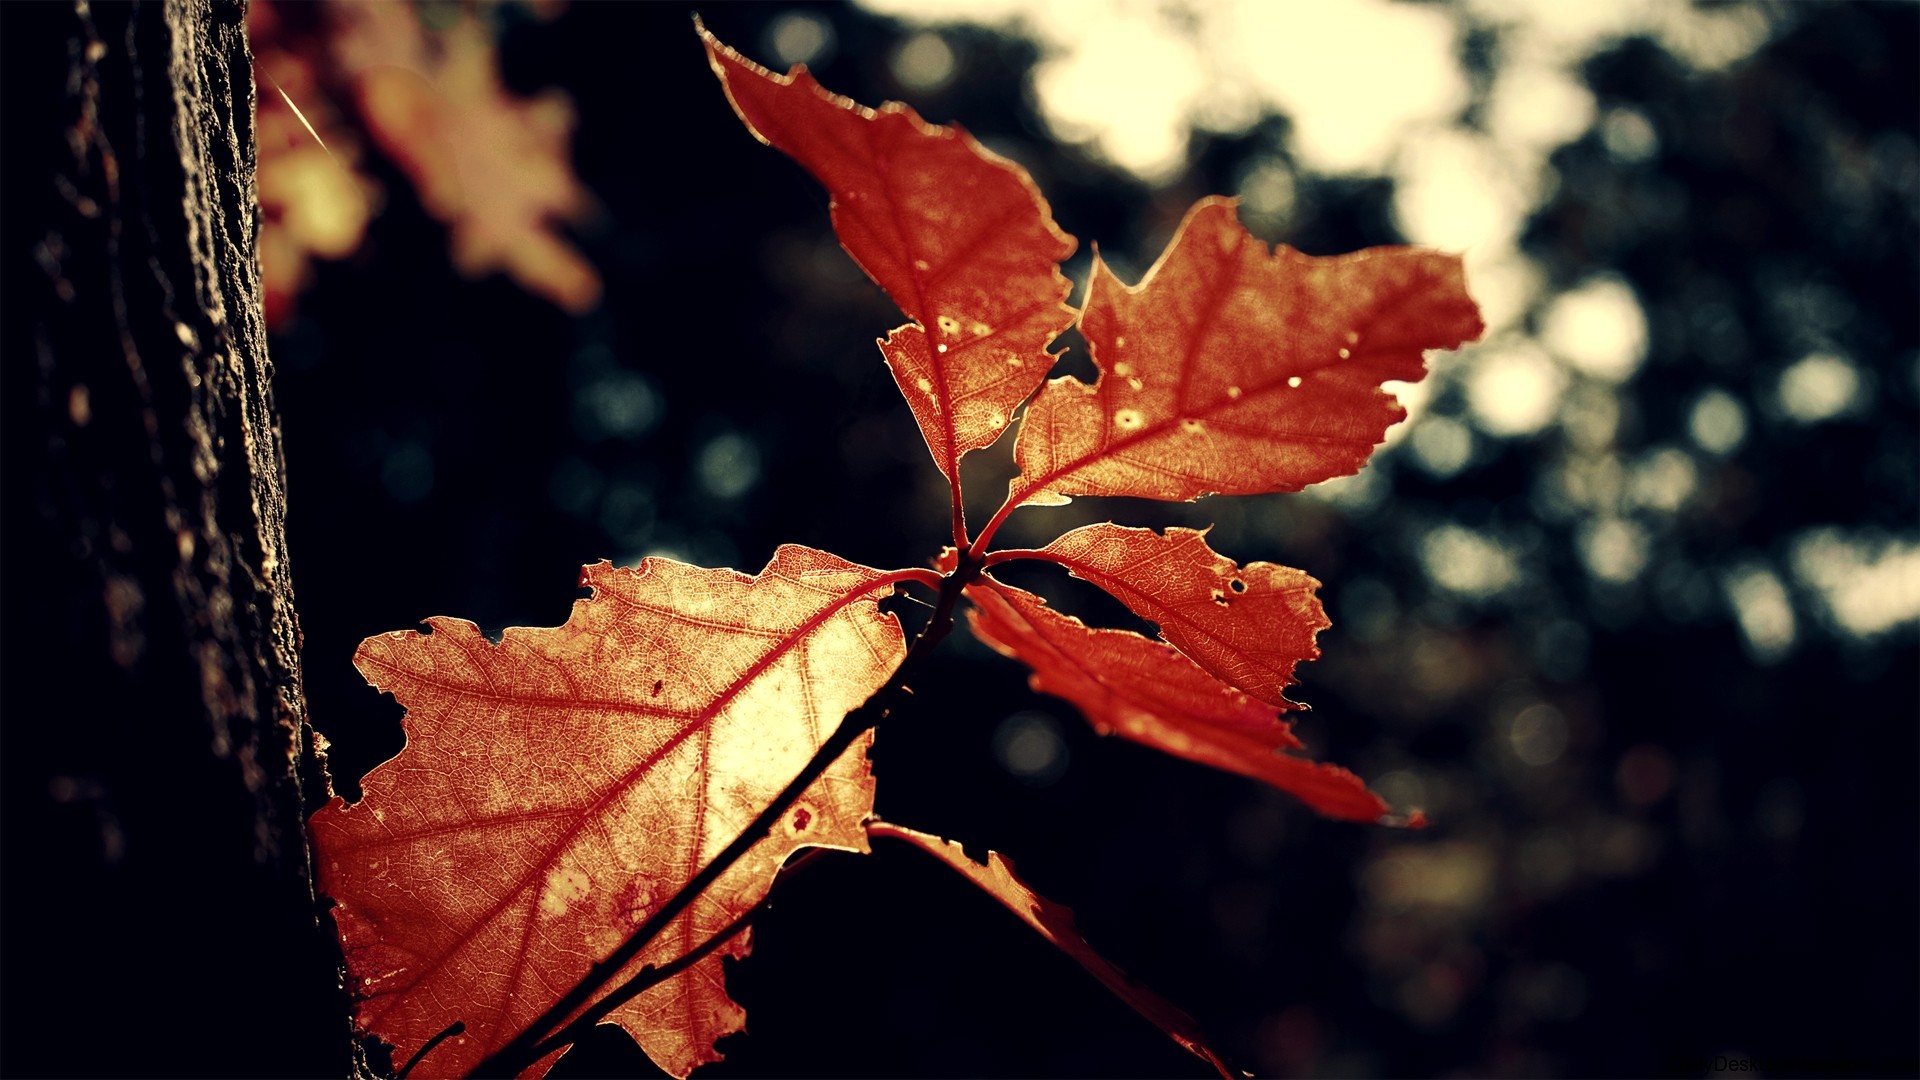 Autumn Oak Leaf - High Definition, High Resolution HD Wallpapers : High